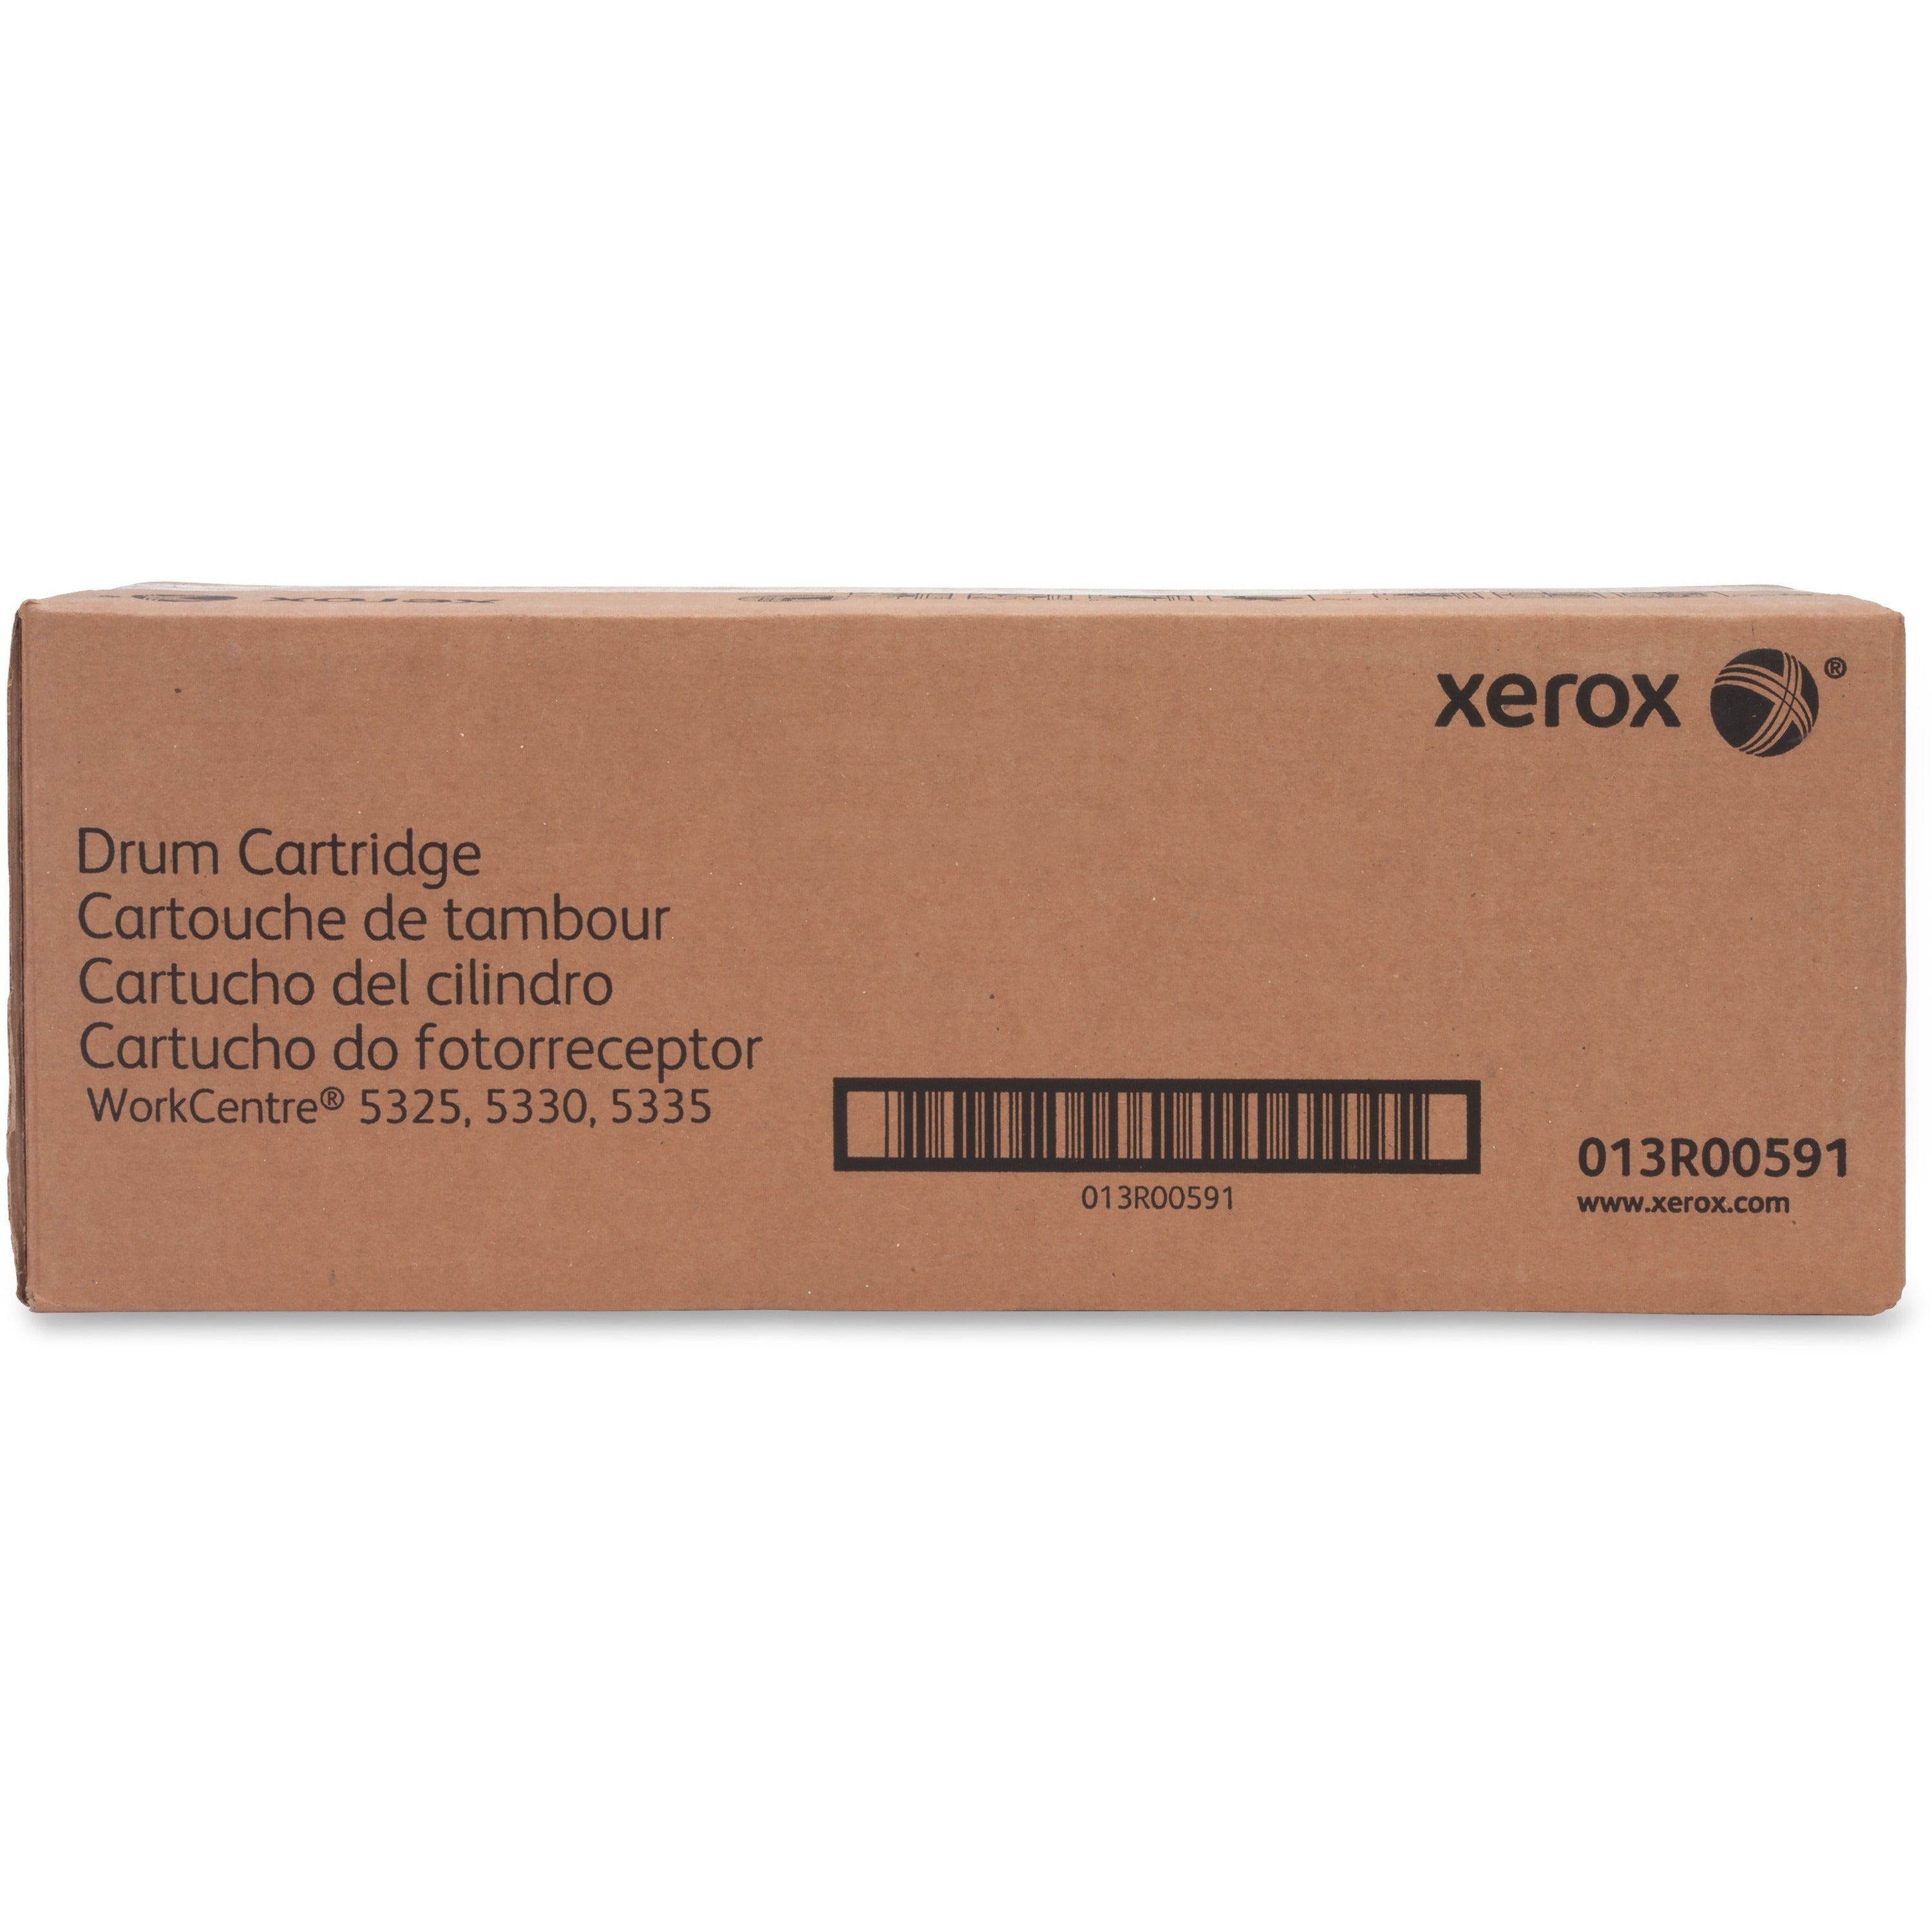 Xerox WorkCentre 5300 Drum Cartridge - Laser Print Technology - 96000 - 1 Each - Black - 